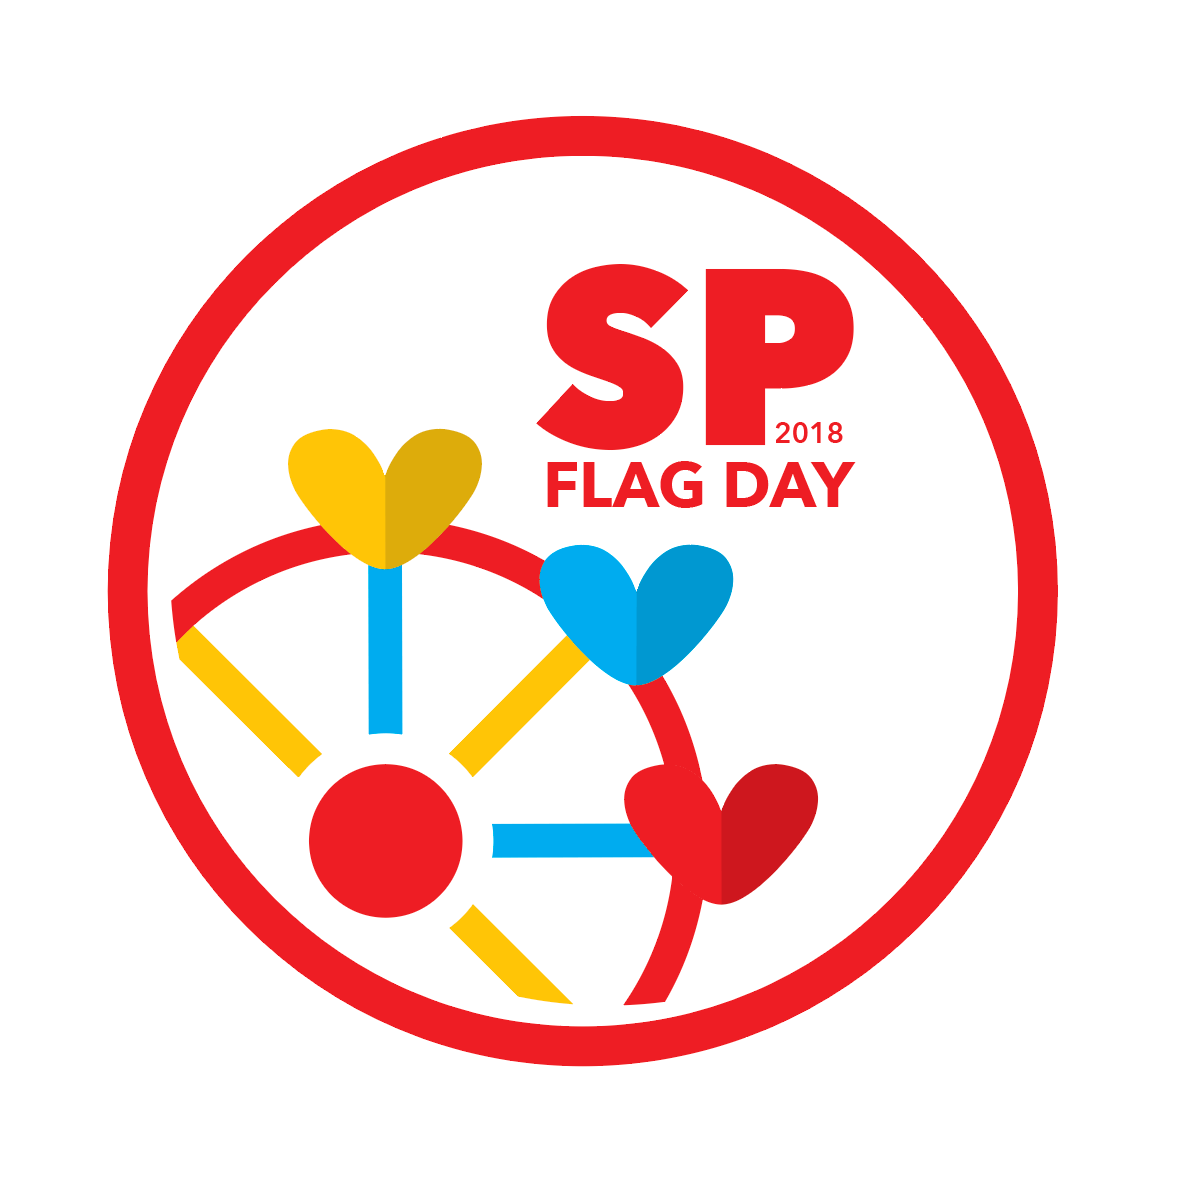 Red Sp Logo - SP FLAG DAY 2018; Logo Design on Behance